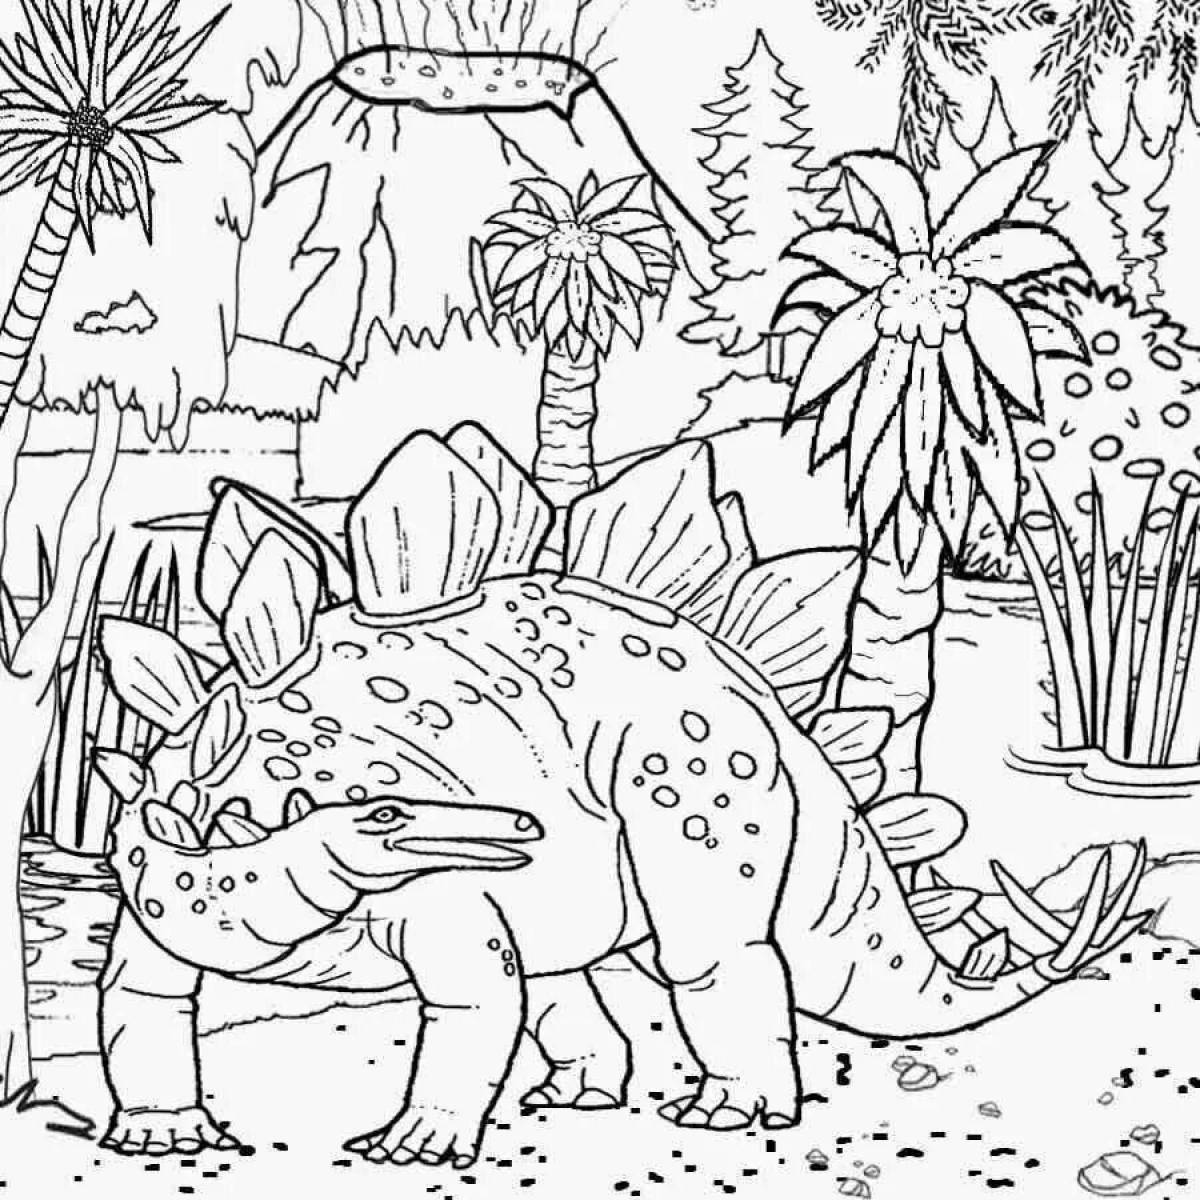 Dinosaur living world coloring book